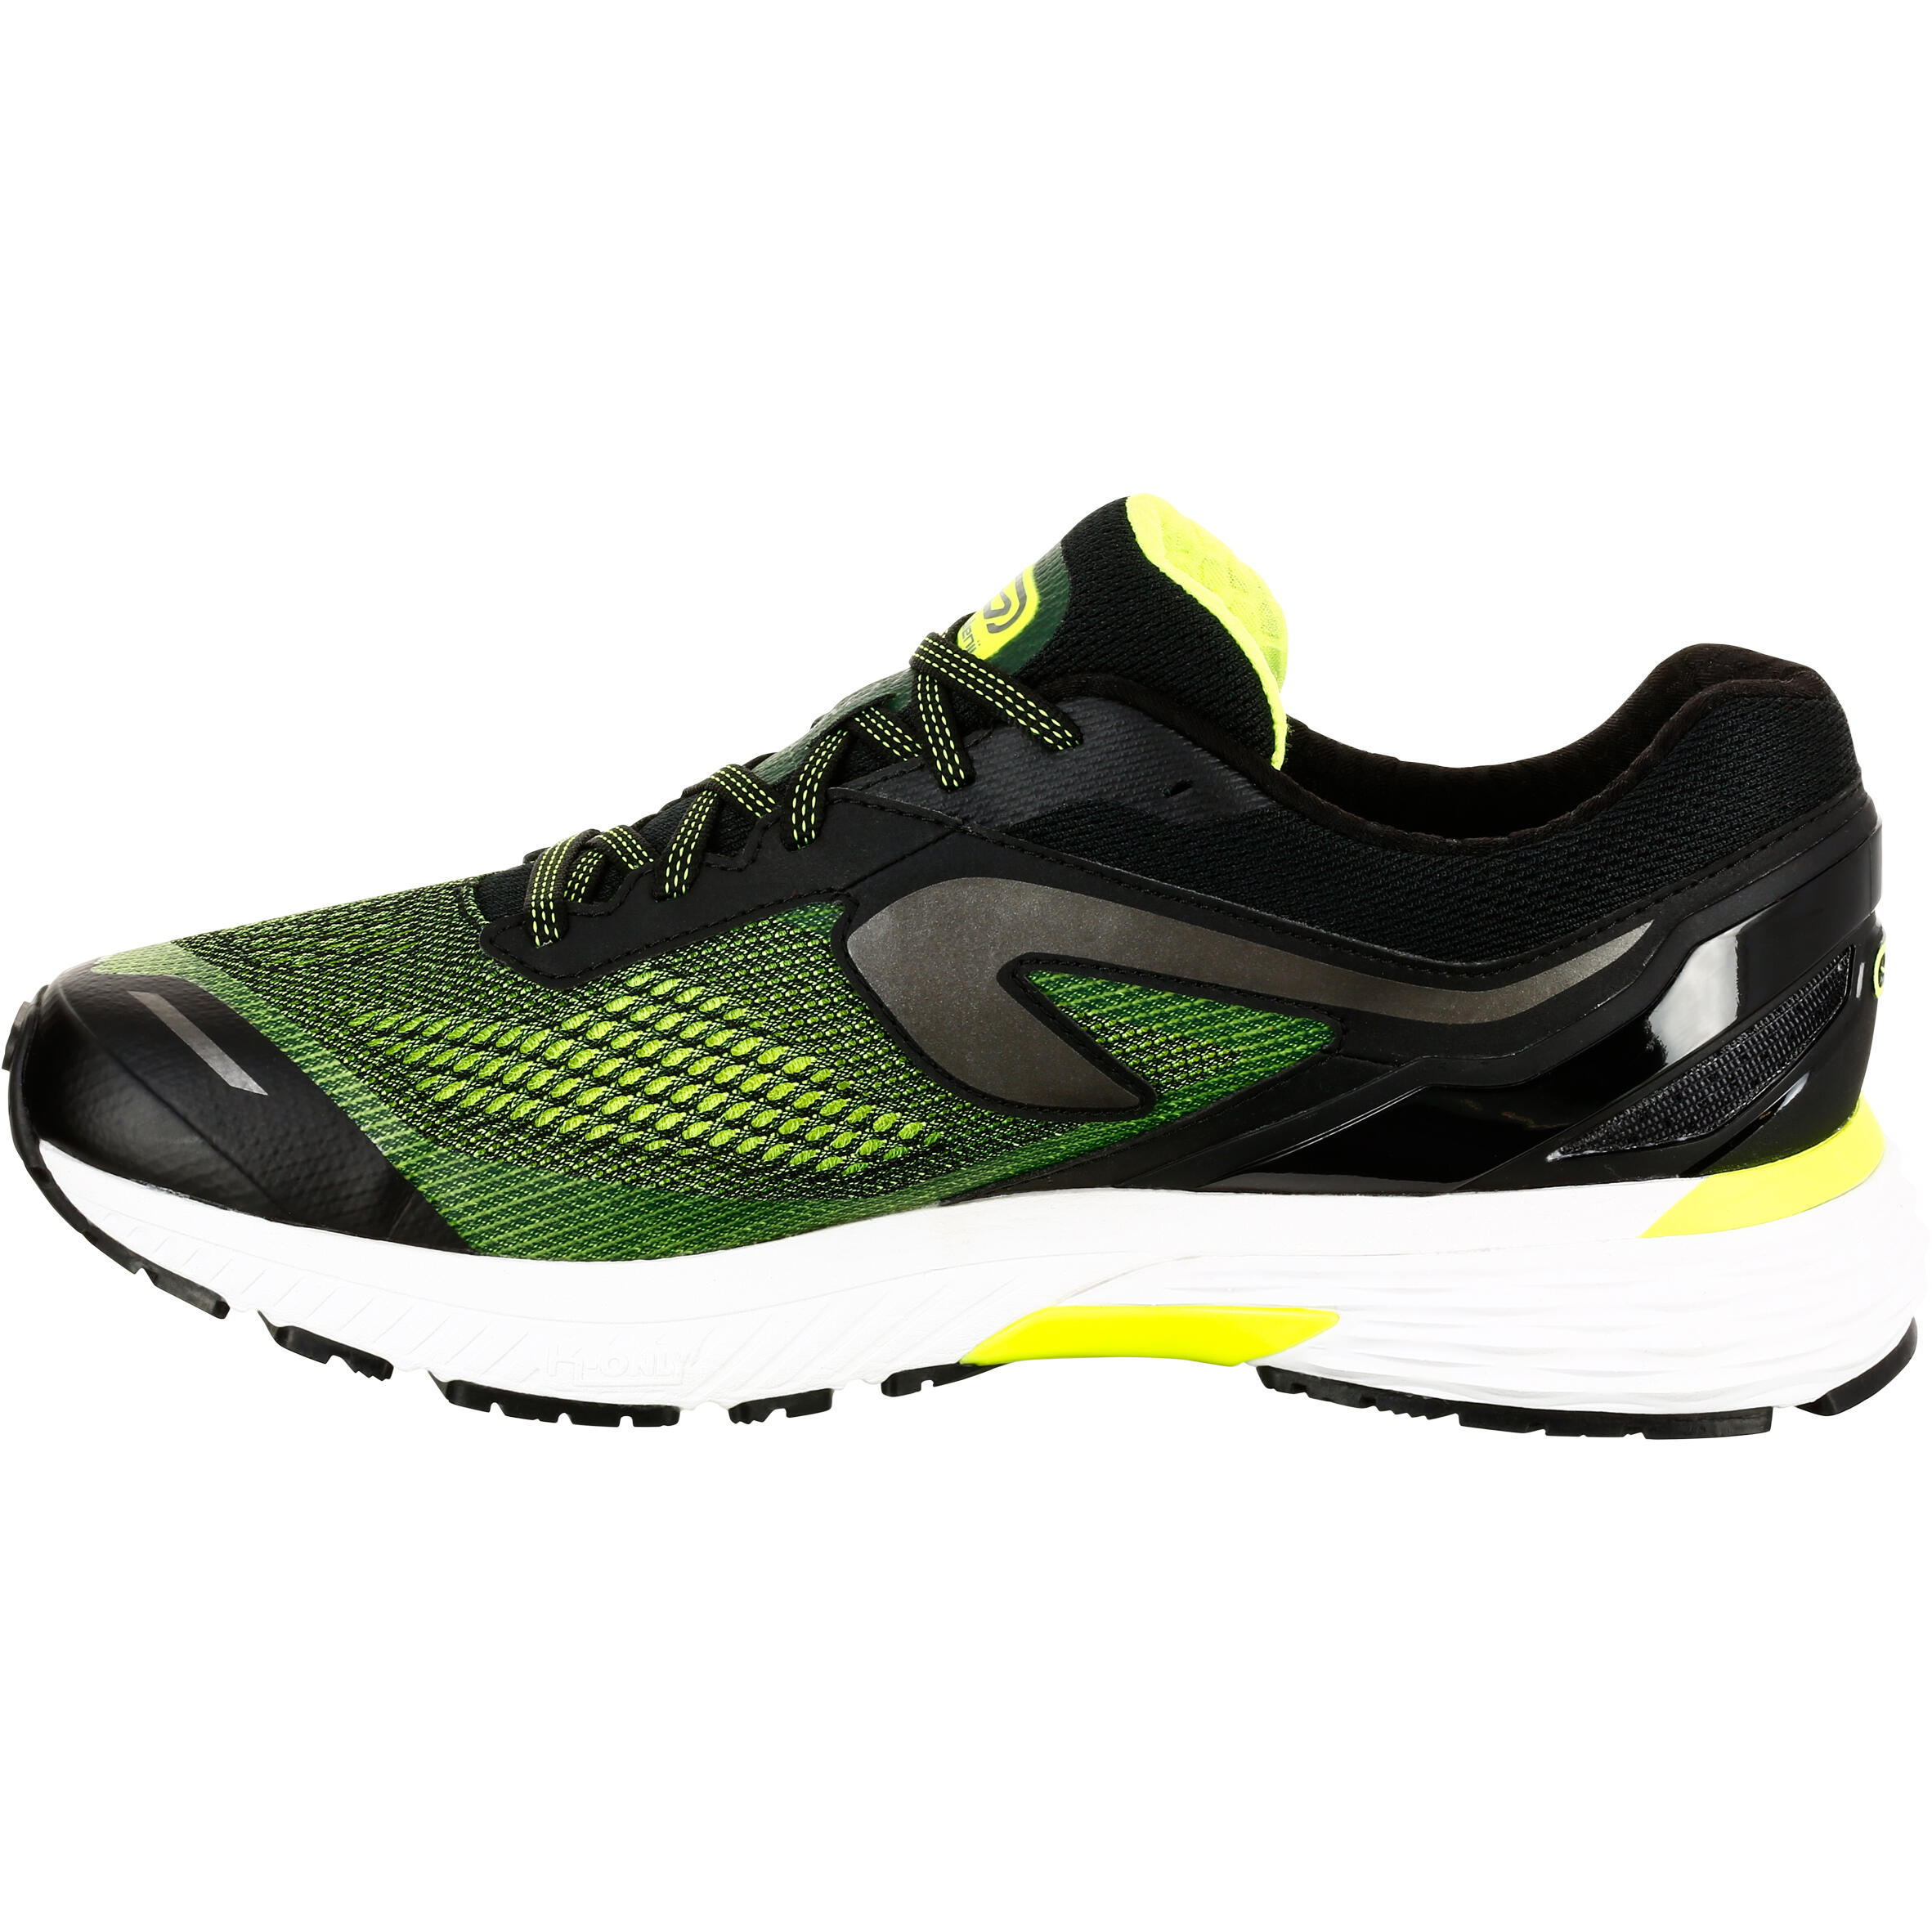 decathlon long distance running shoes